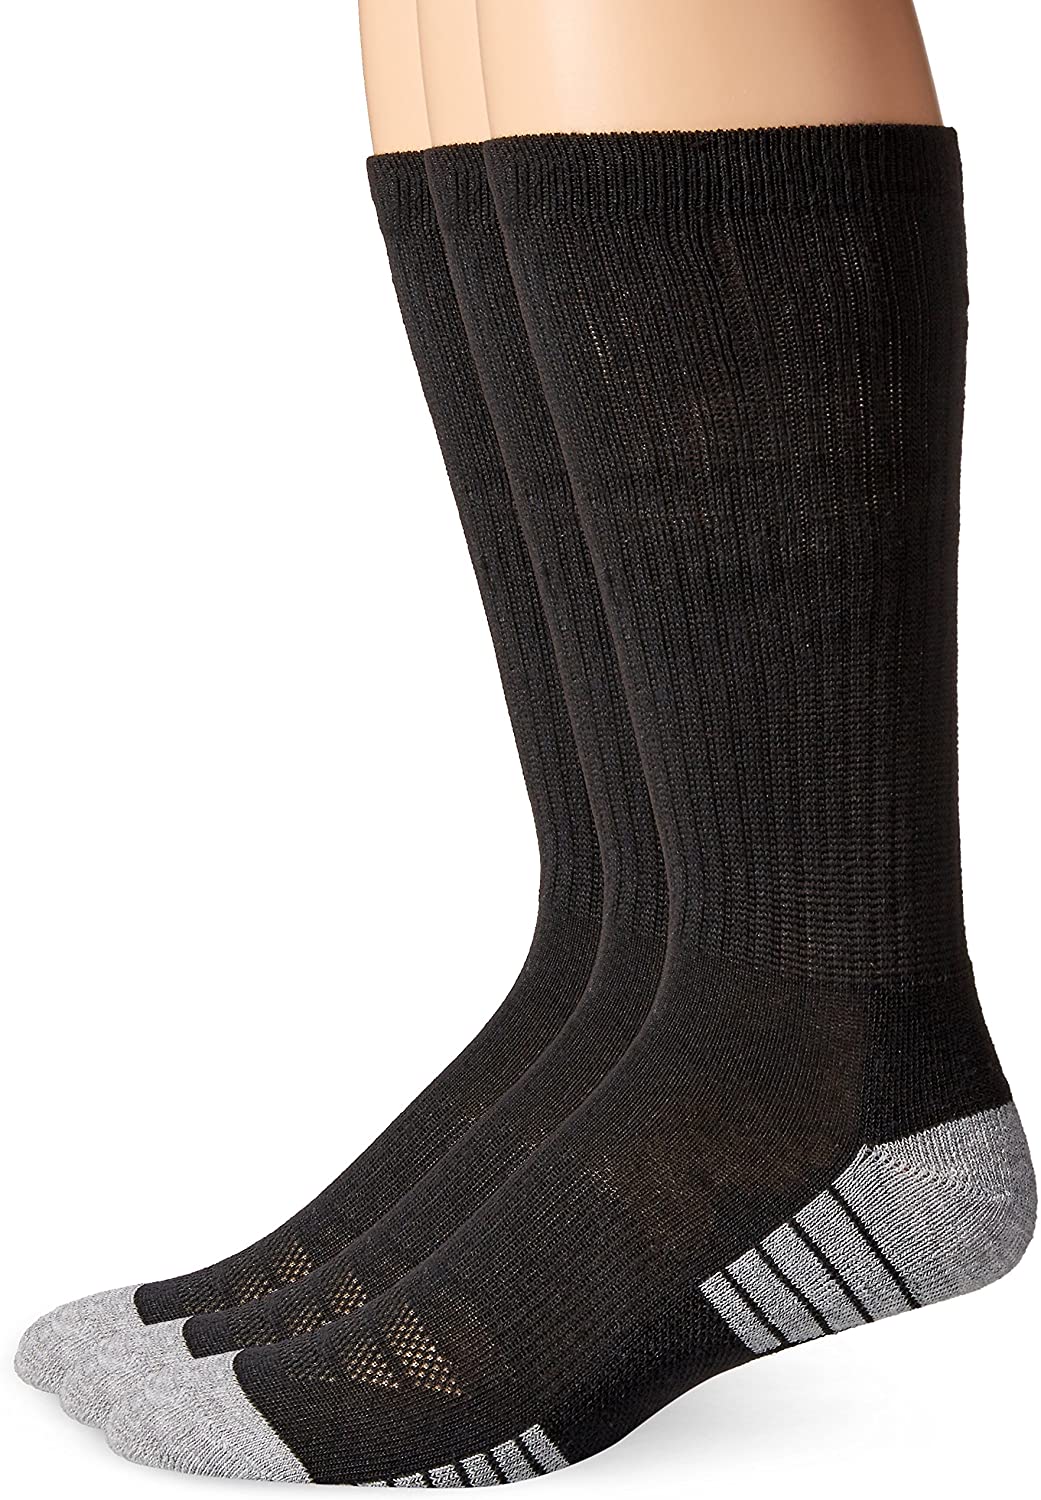 Under Armour Adult Heatgear Tech Crew Socks, 3-Pairs | eBay